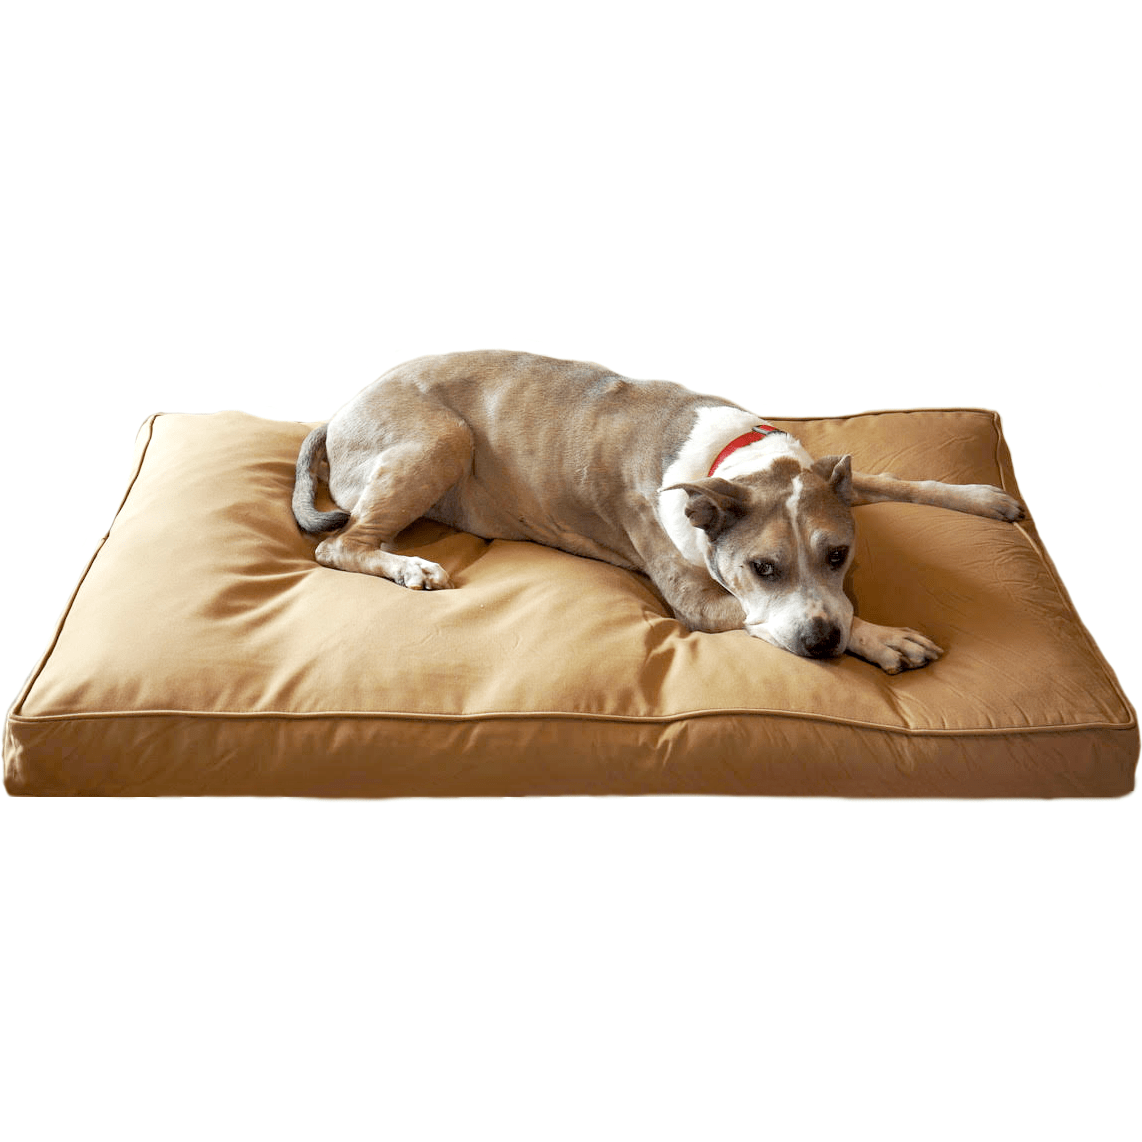 buy large dog bed